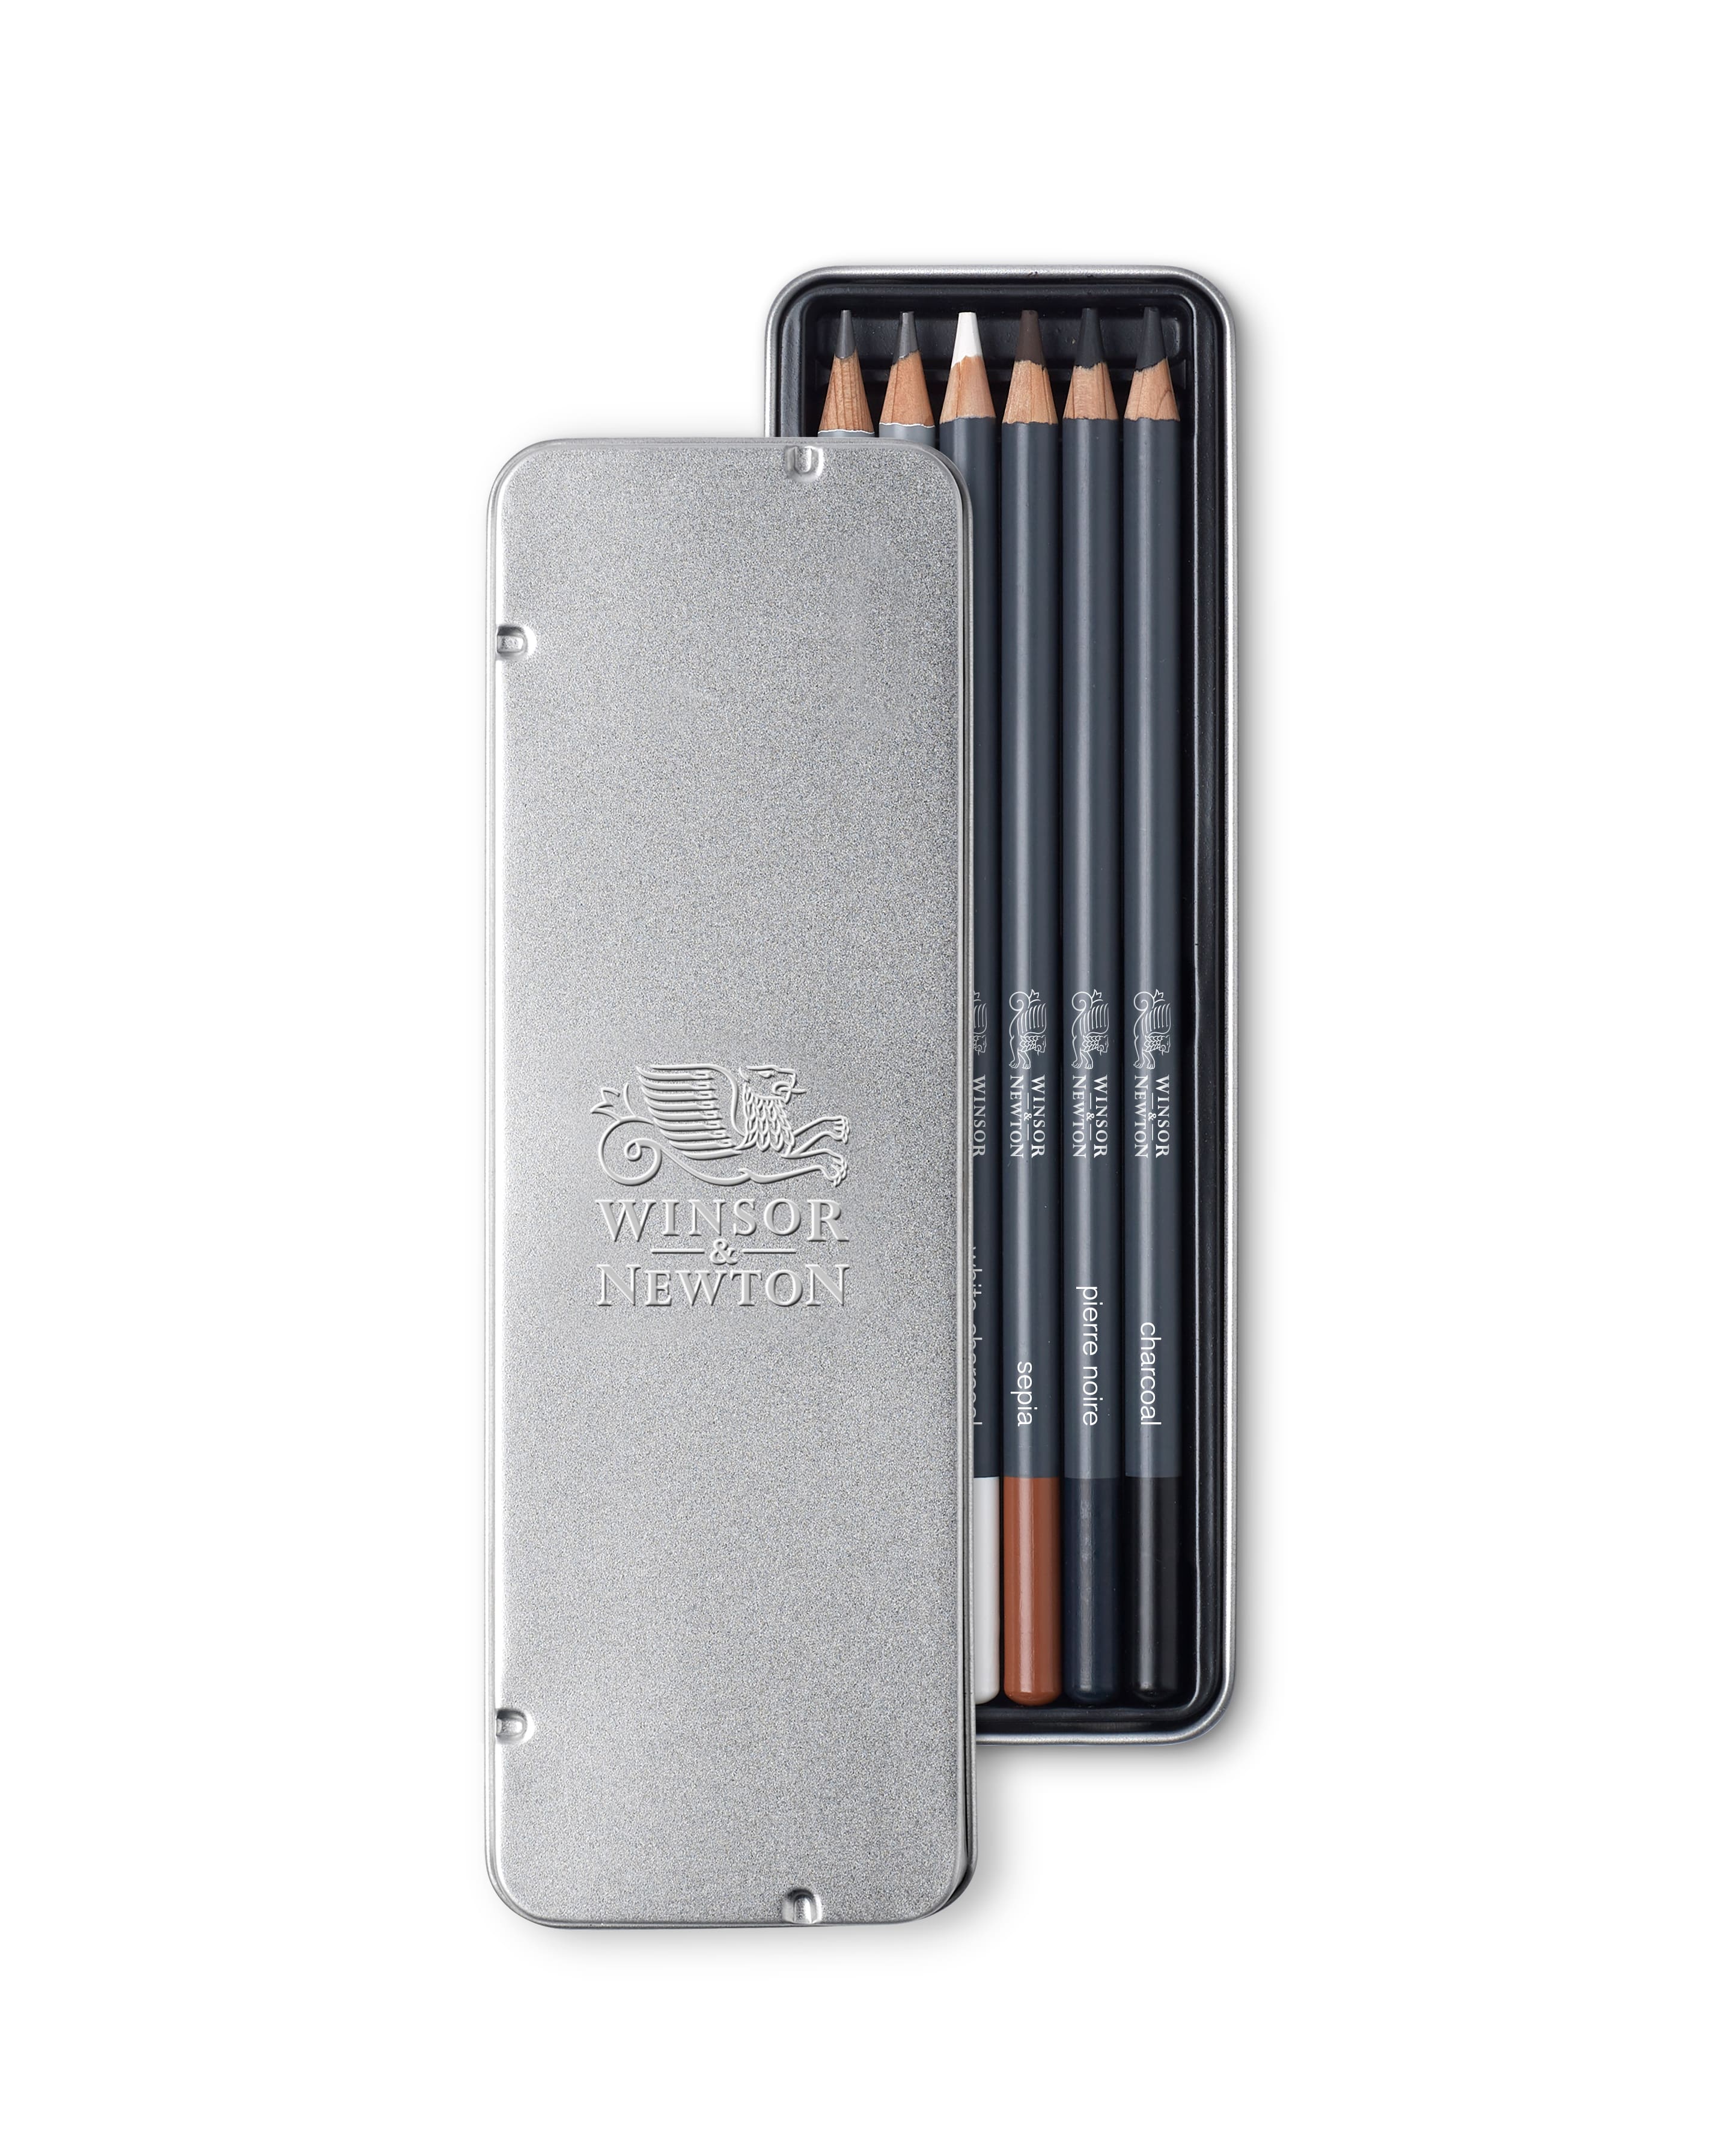 6 Packs: 6 Ct. (36 Total) Winsor & Newton Studio Collection Charcoal Pencil Set, Size: 8.76 x 0.63 x 2.5, Black